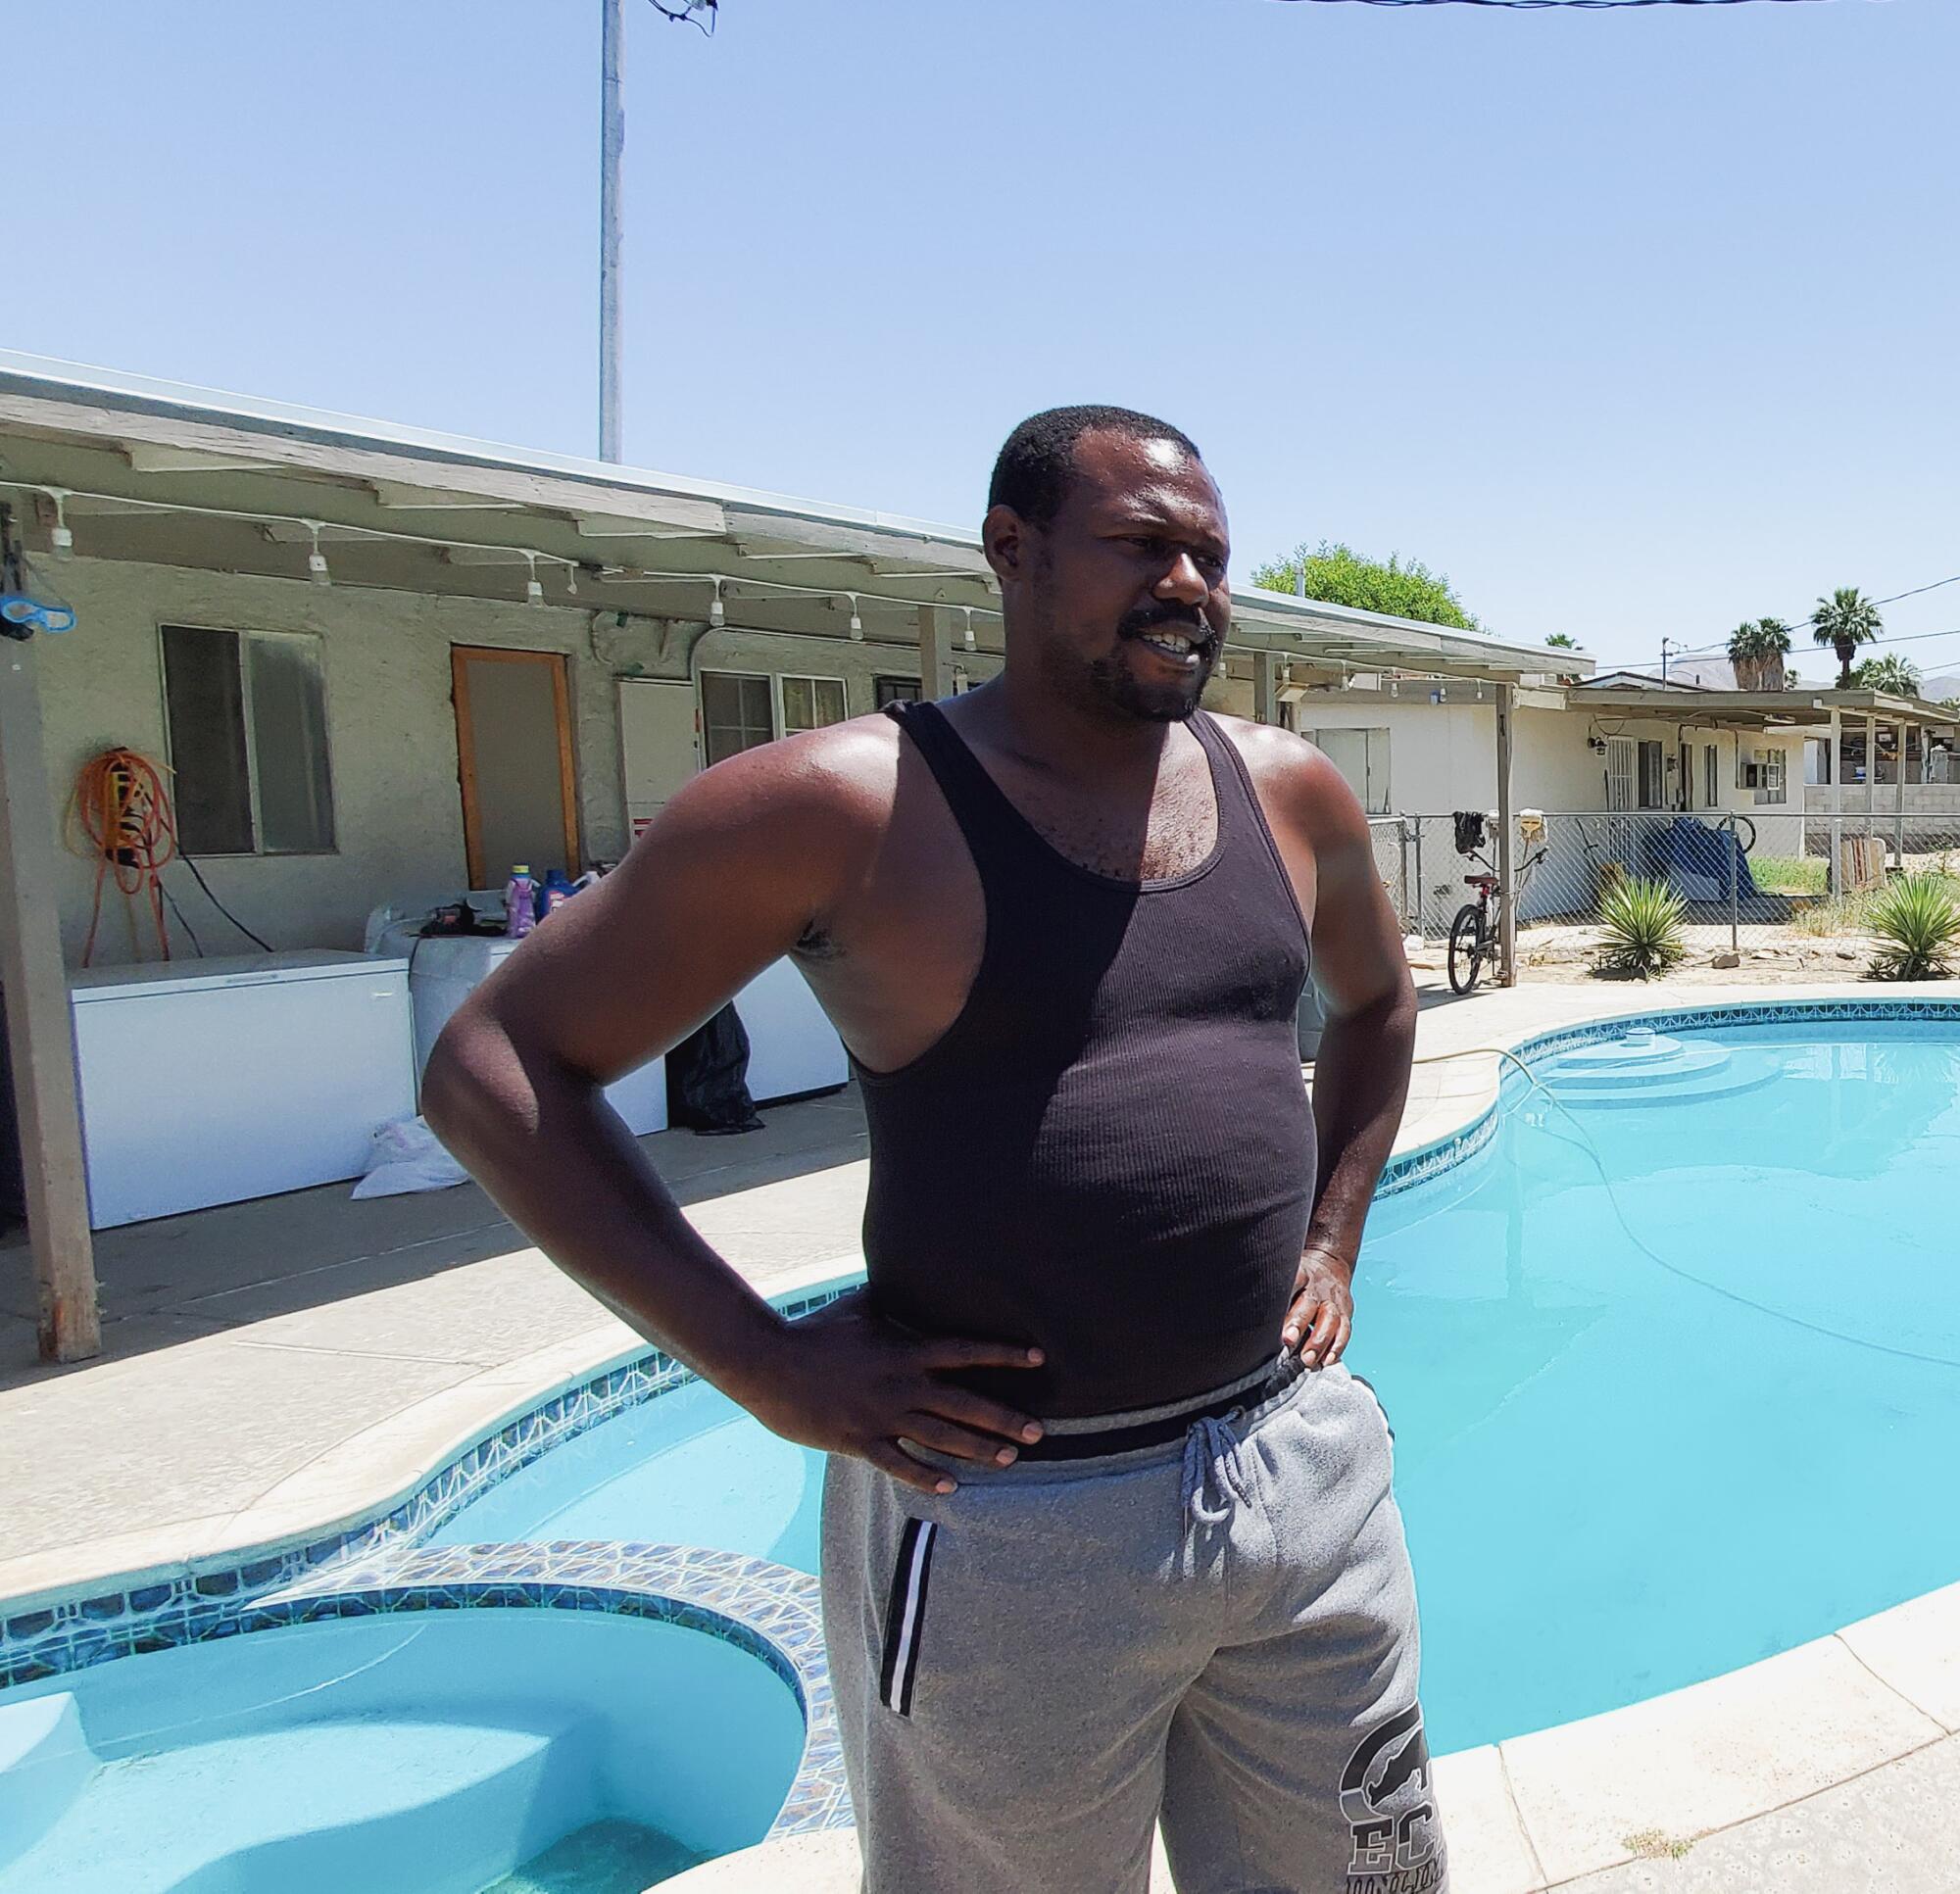 A man standing next to a backyard swimming pool